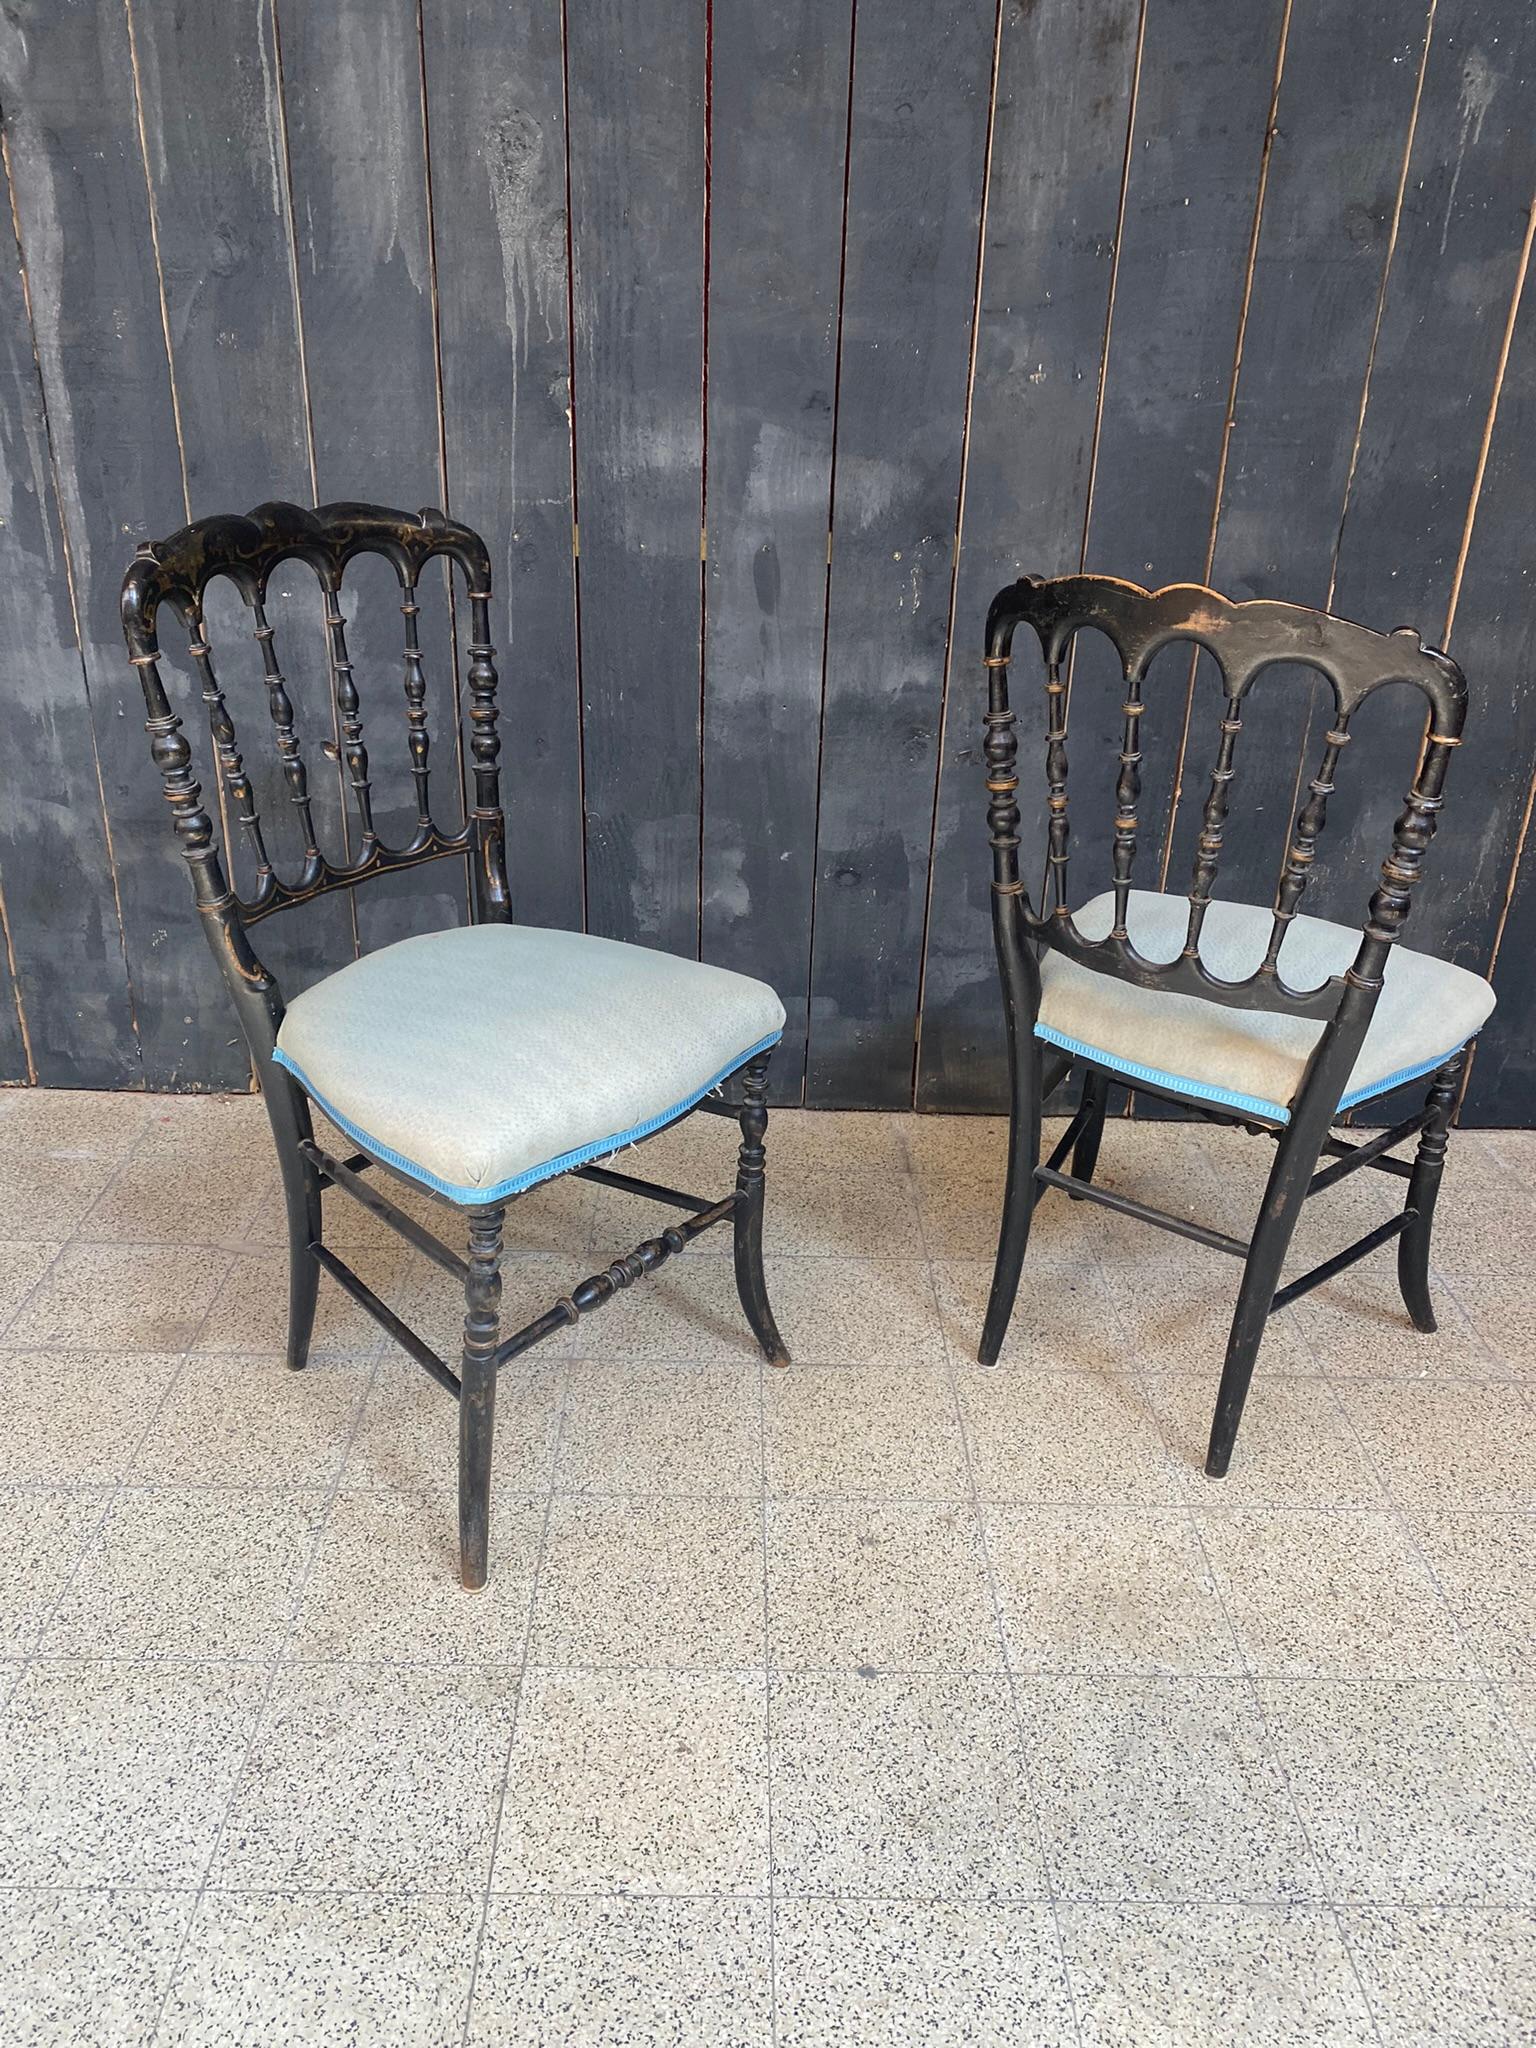 2 Original Chiarivari Napoleon III Ebonized Chairs, France, 1850s For Sale 1